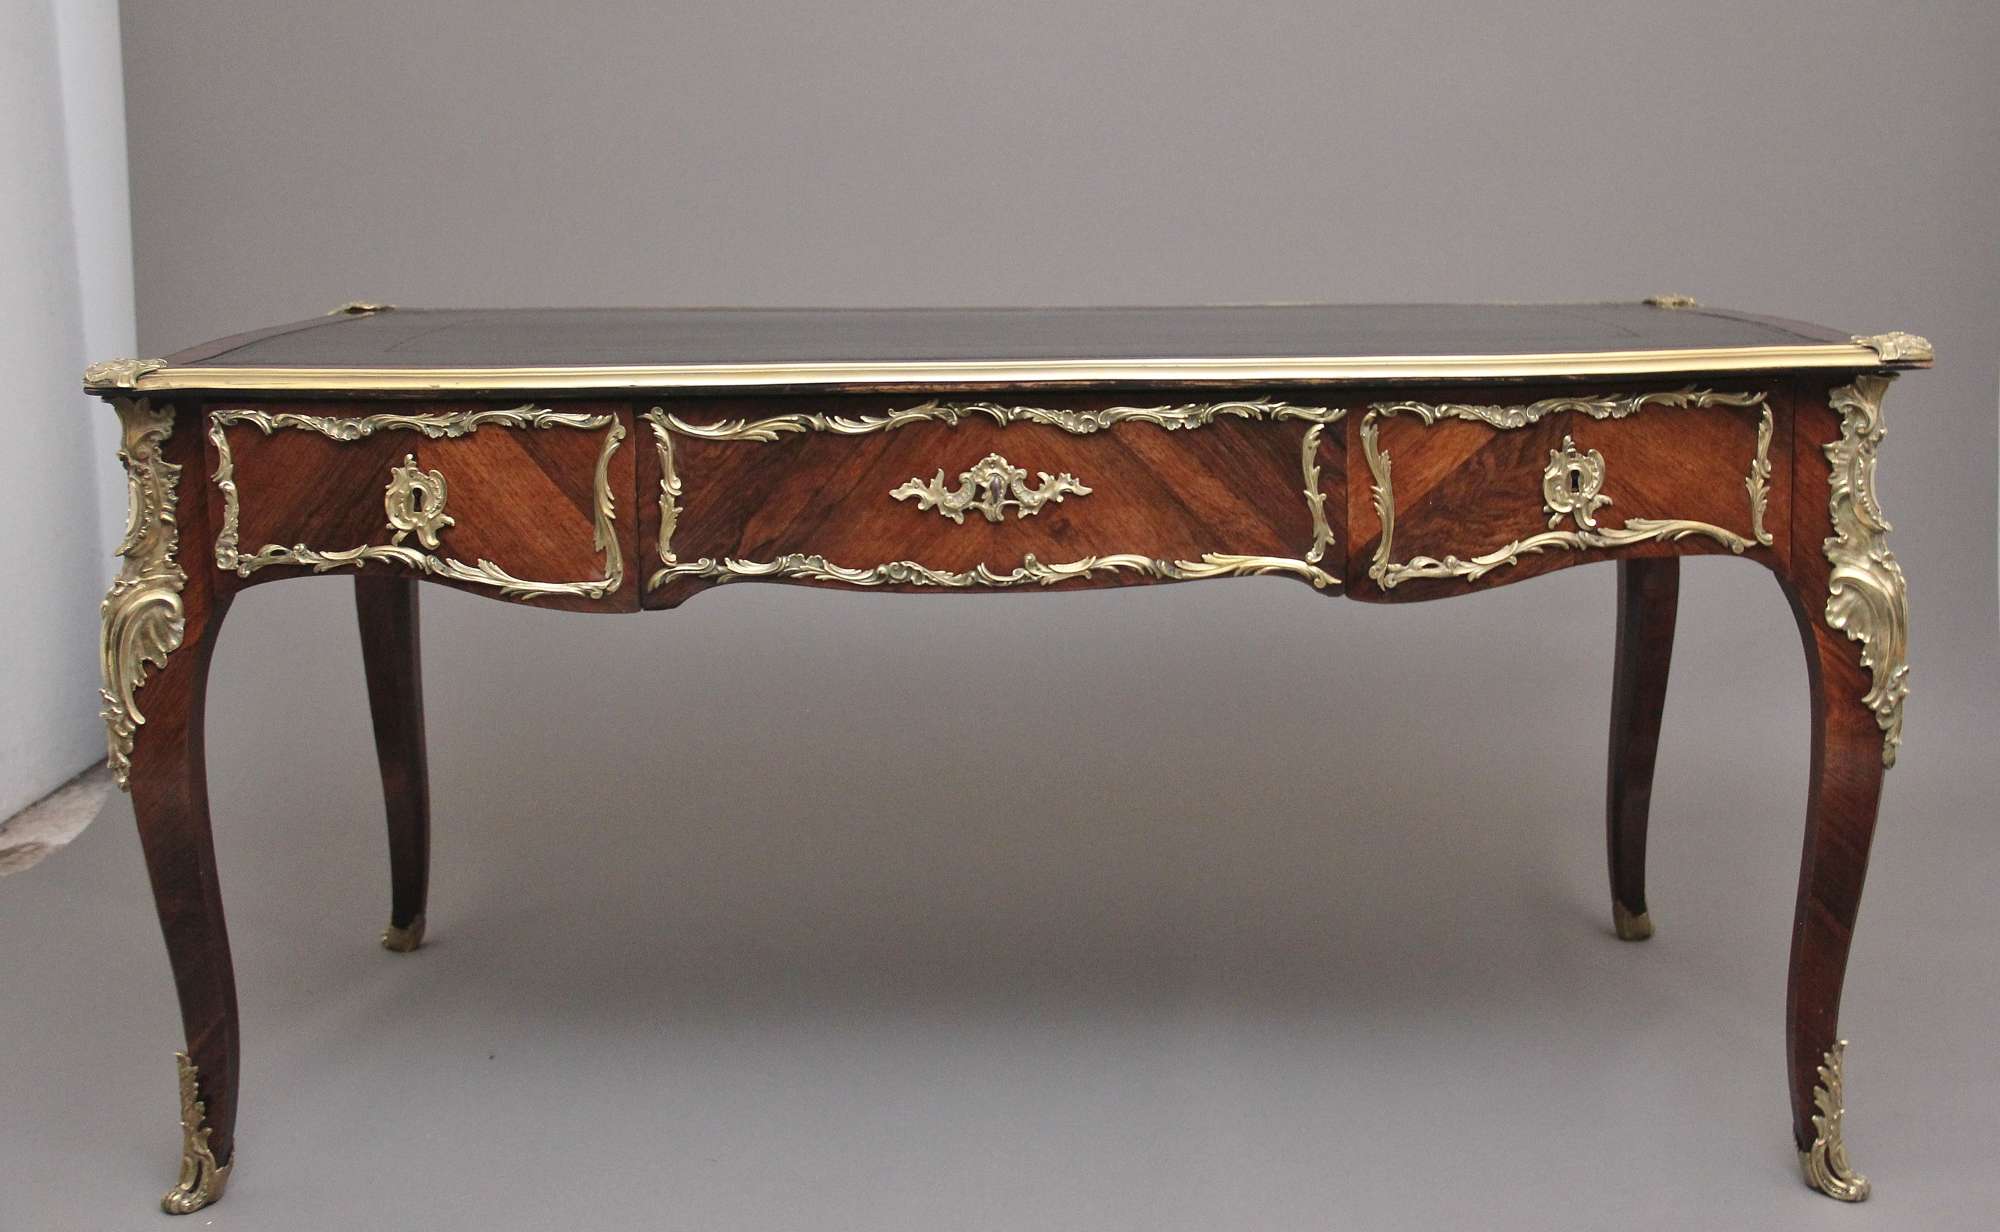 A Superb Quality 19th Century French Kingwood And Ormolu Mounted Bureau-plat Desk